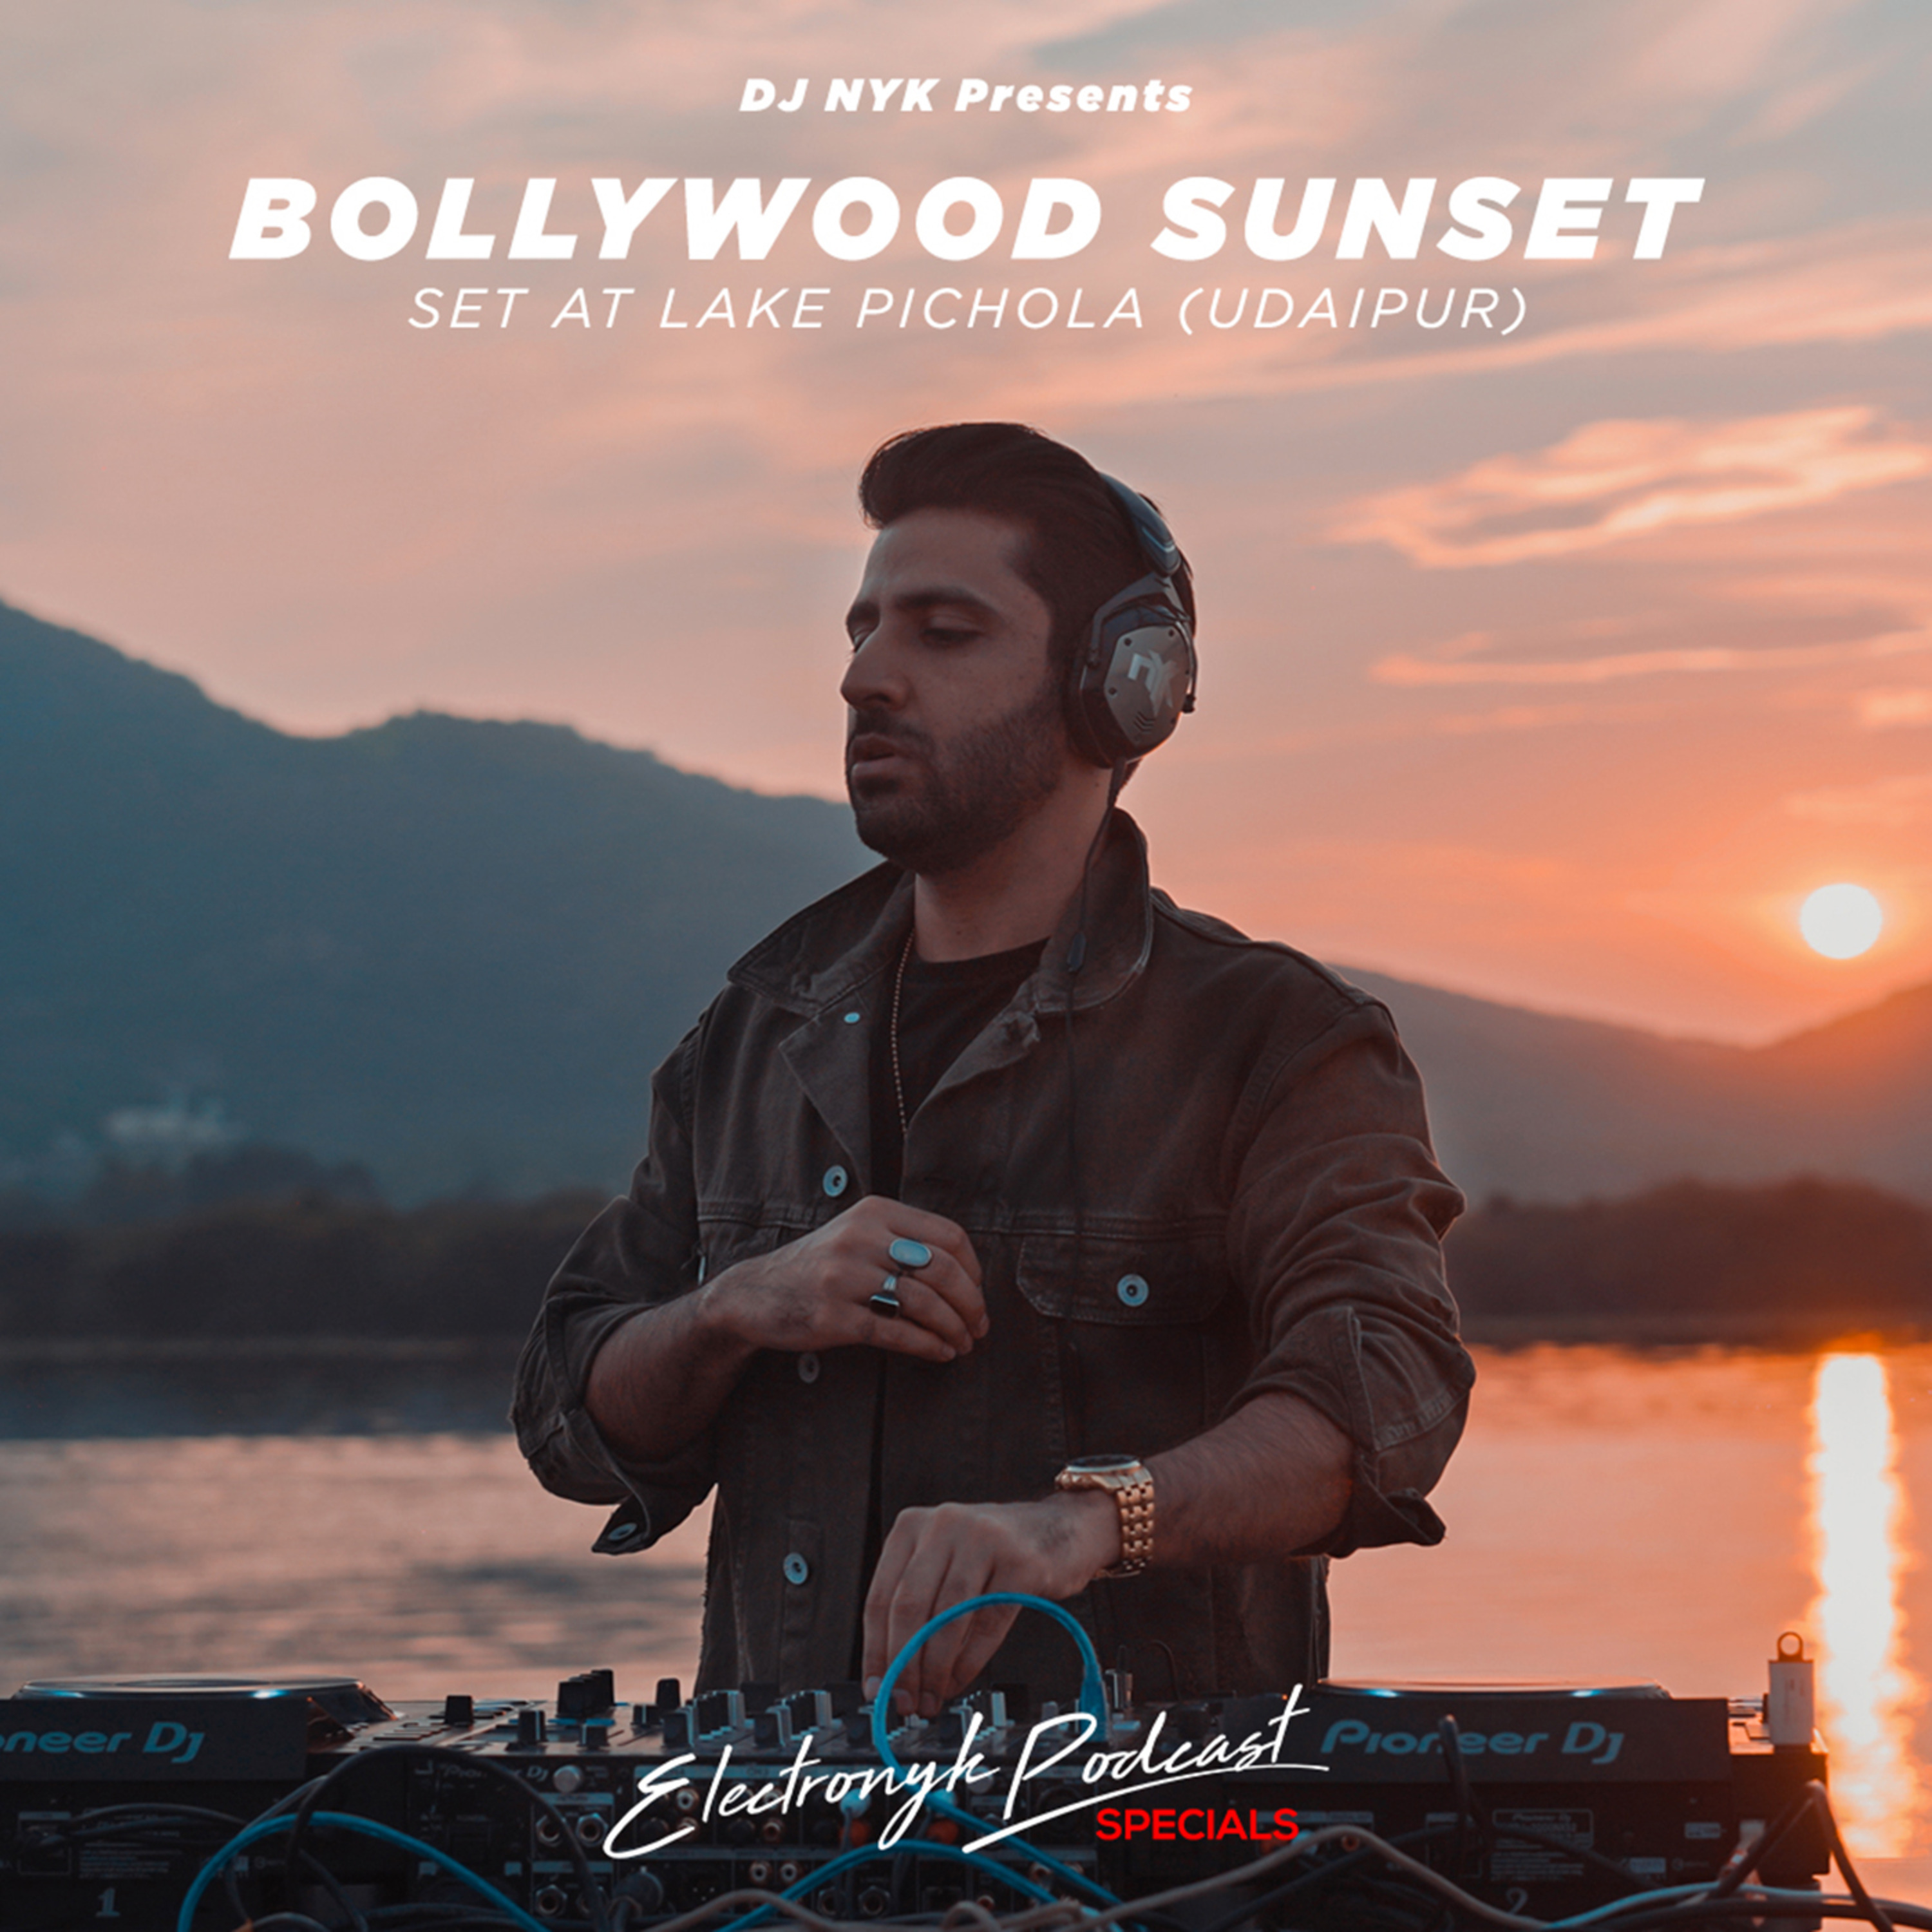 Electronyk Podcast Specials | DJ NYK Sunset Set at Lake Pichola (Udaipur)